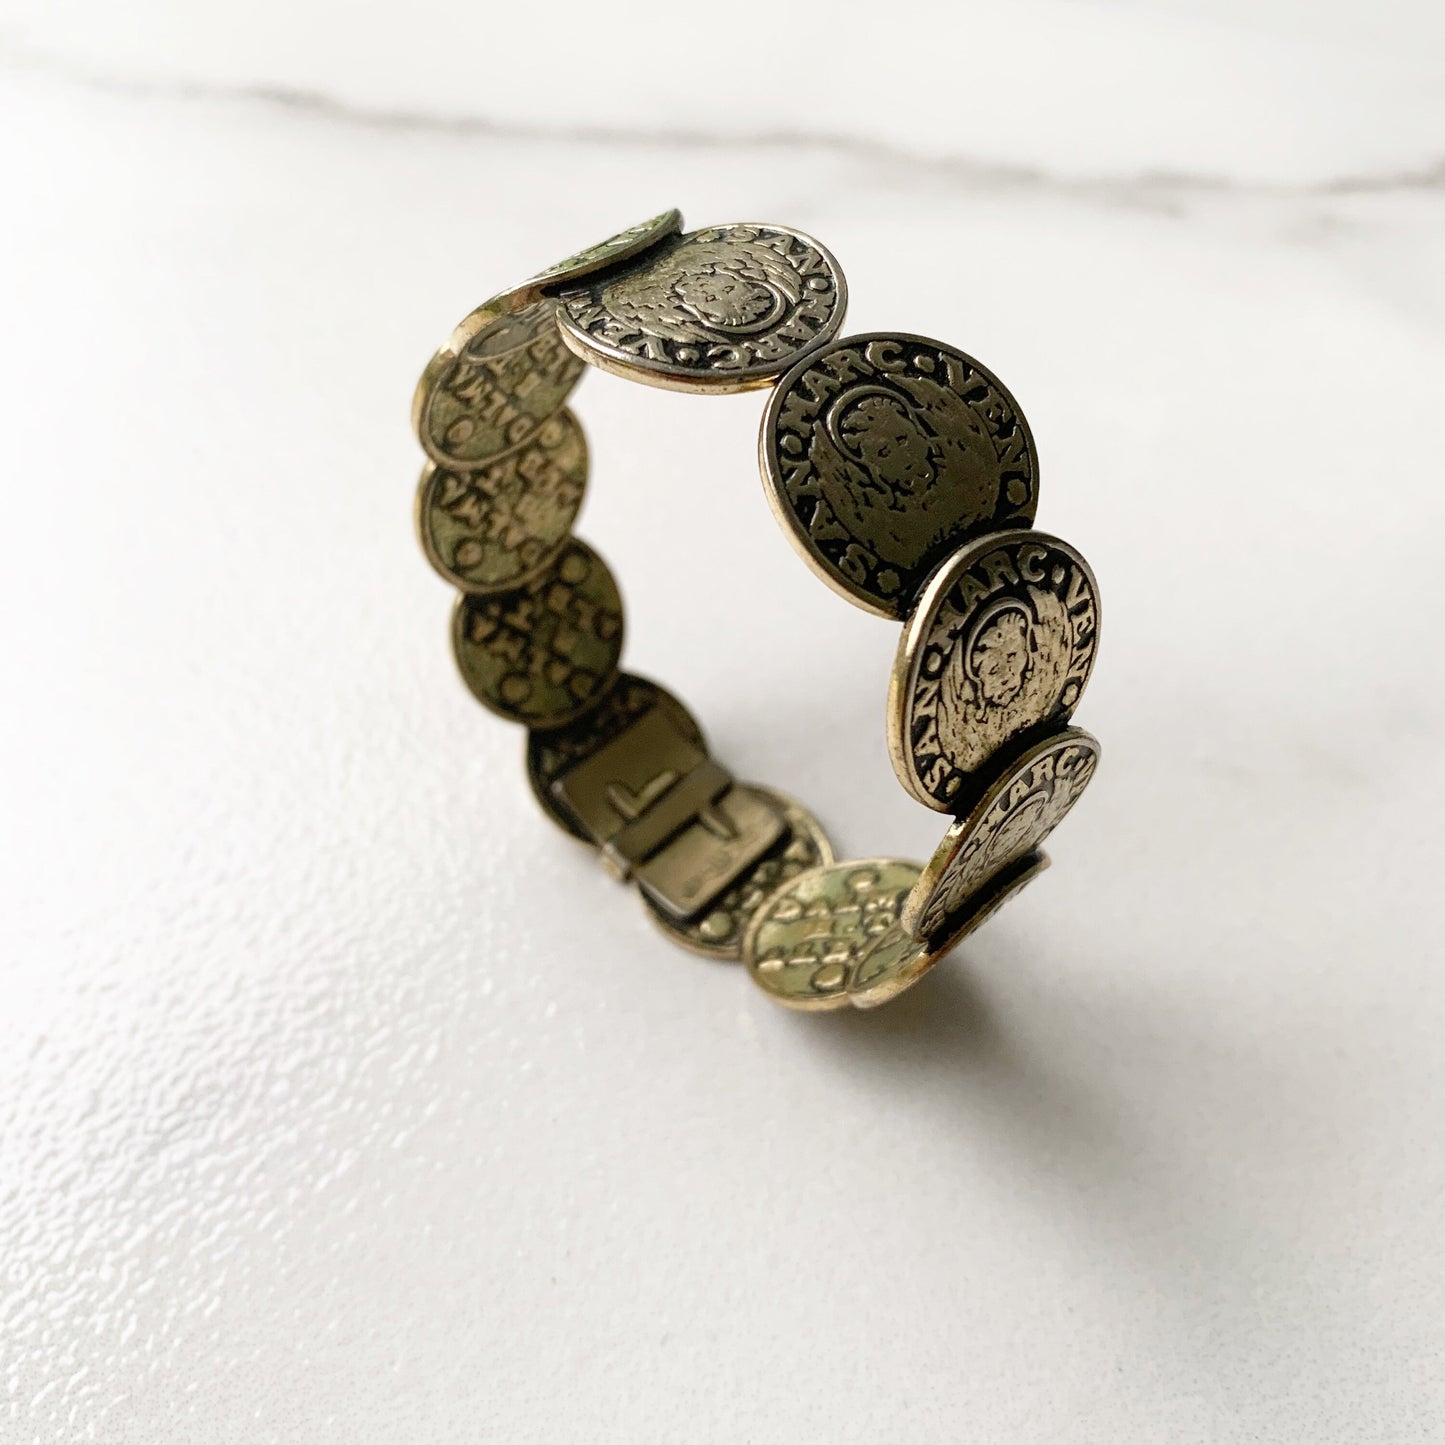 Vintage Whiting & Davis Coin Bracelet | Venetian Coin Hinge Cuff Bracelet